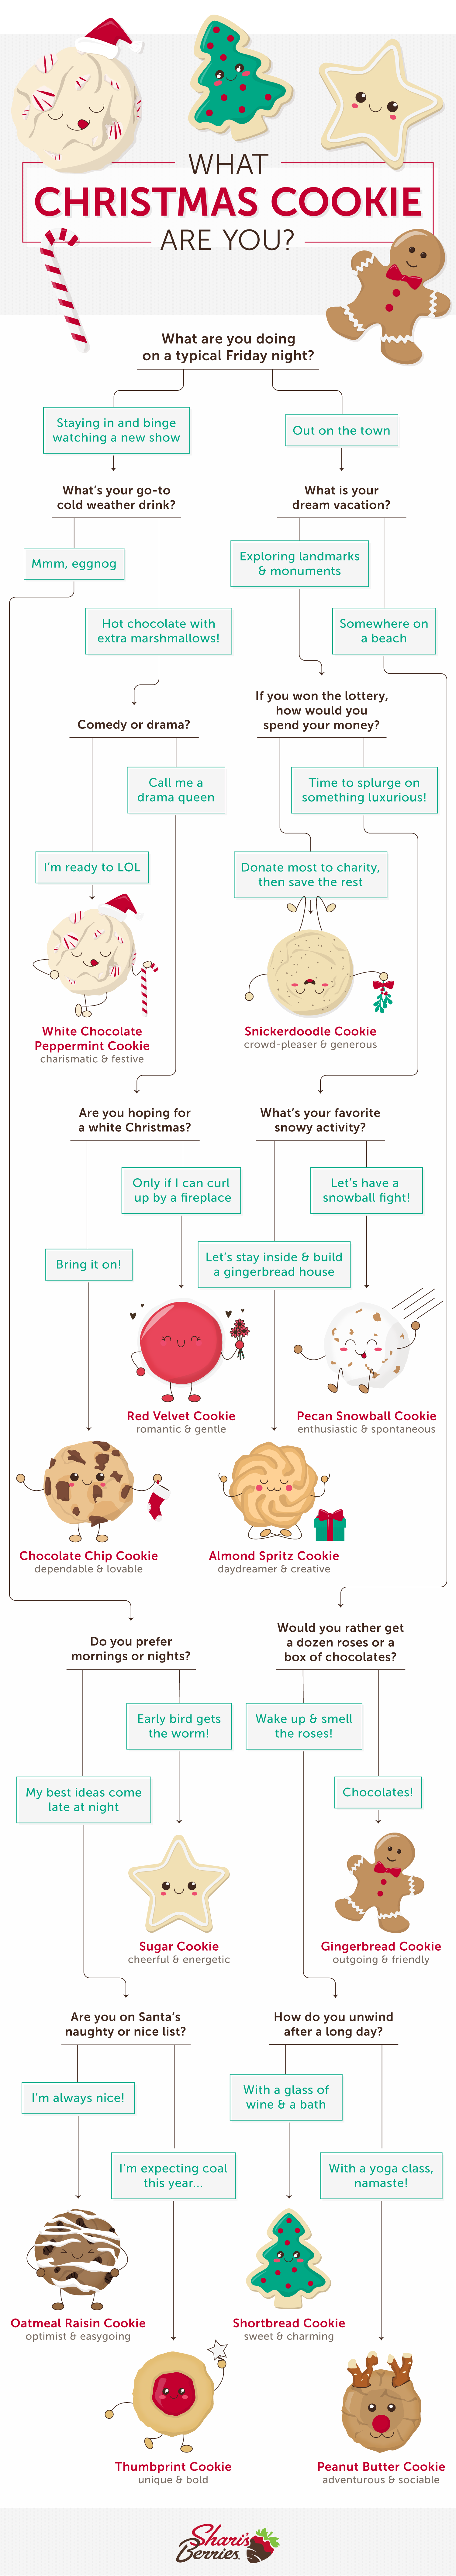 flow chart of Christmas cookies